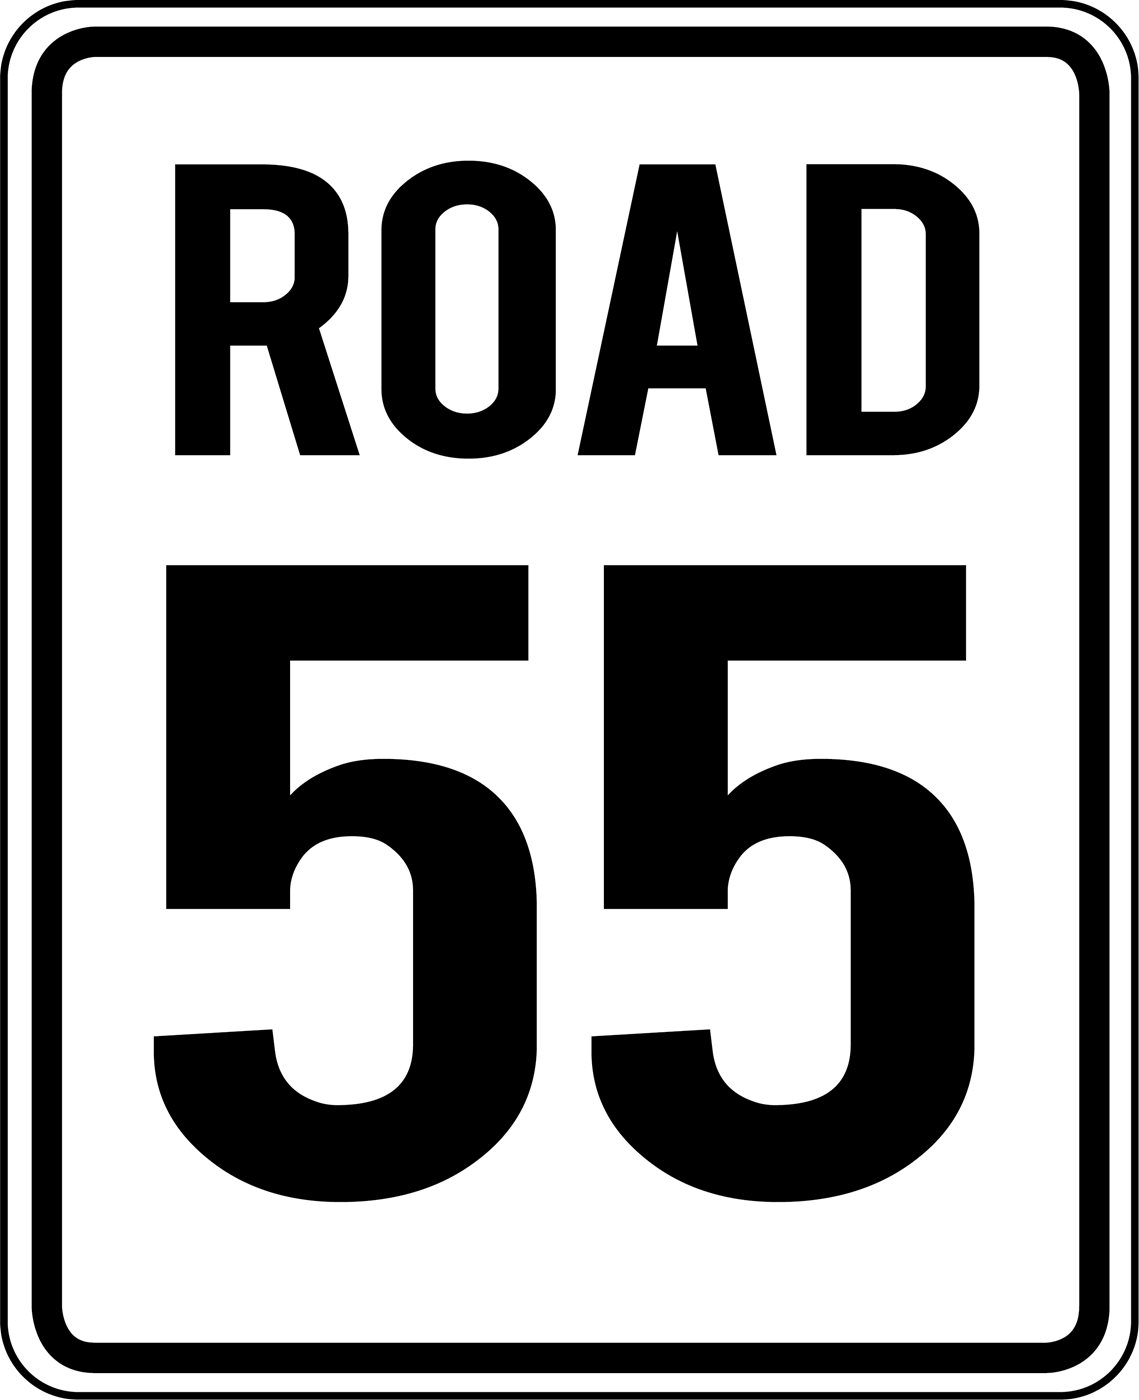 Road 55 logo